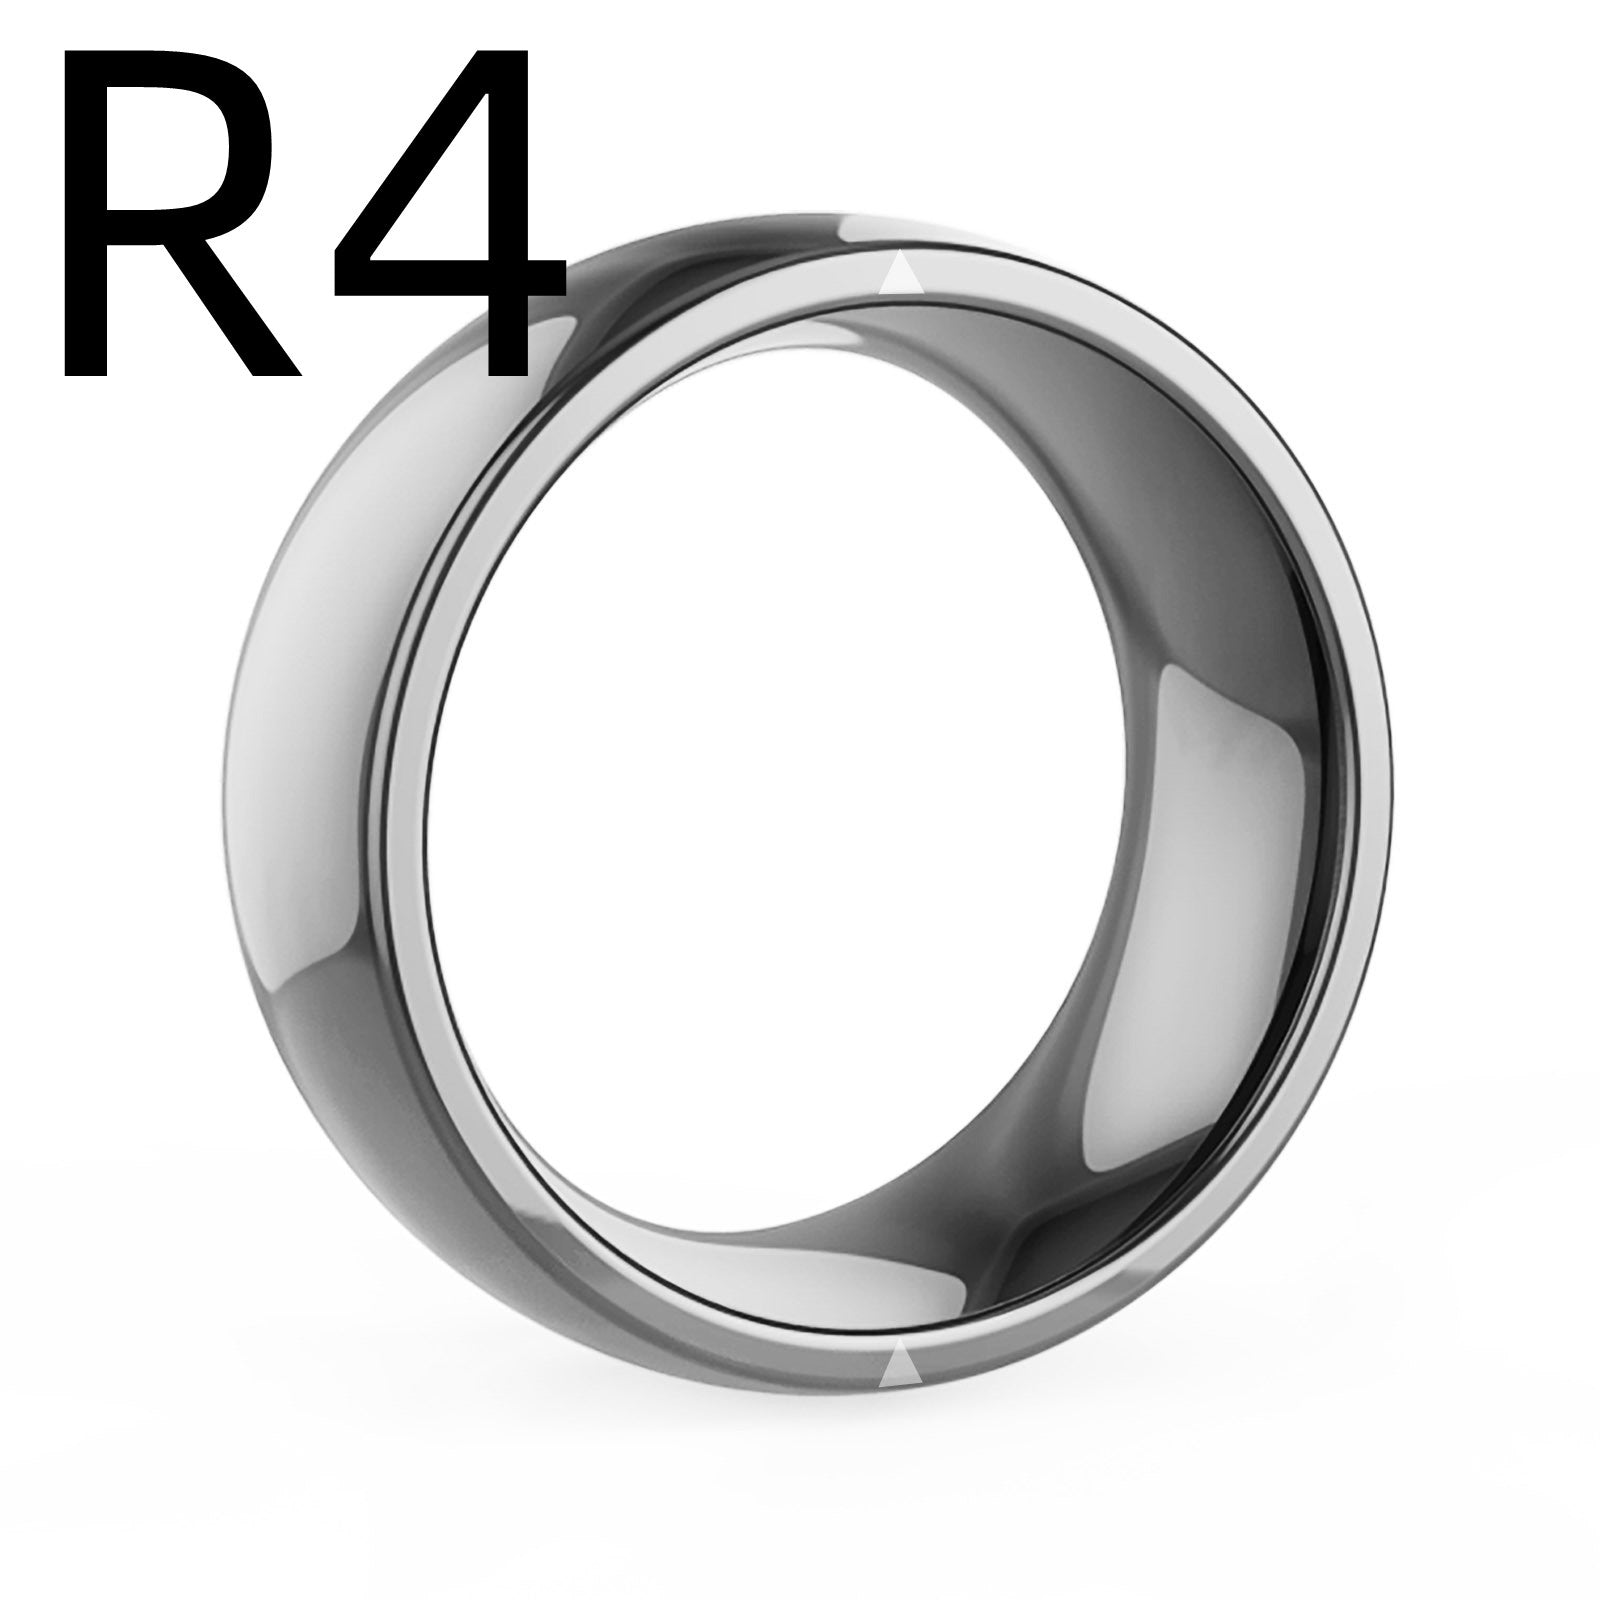 Smart Ring intelligenter NFC-Ring